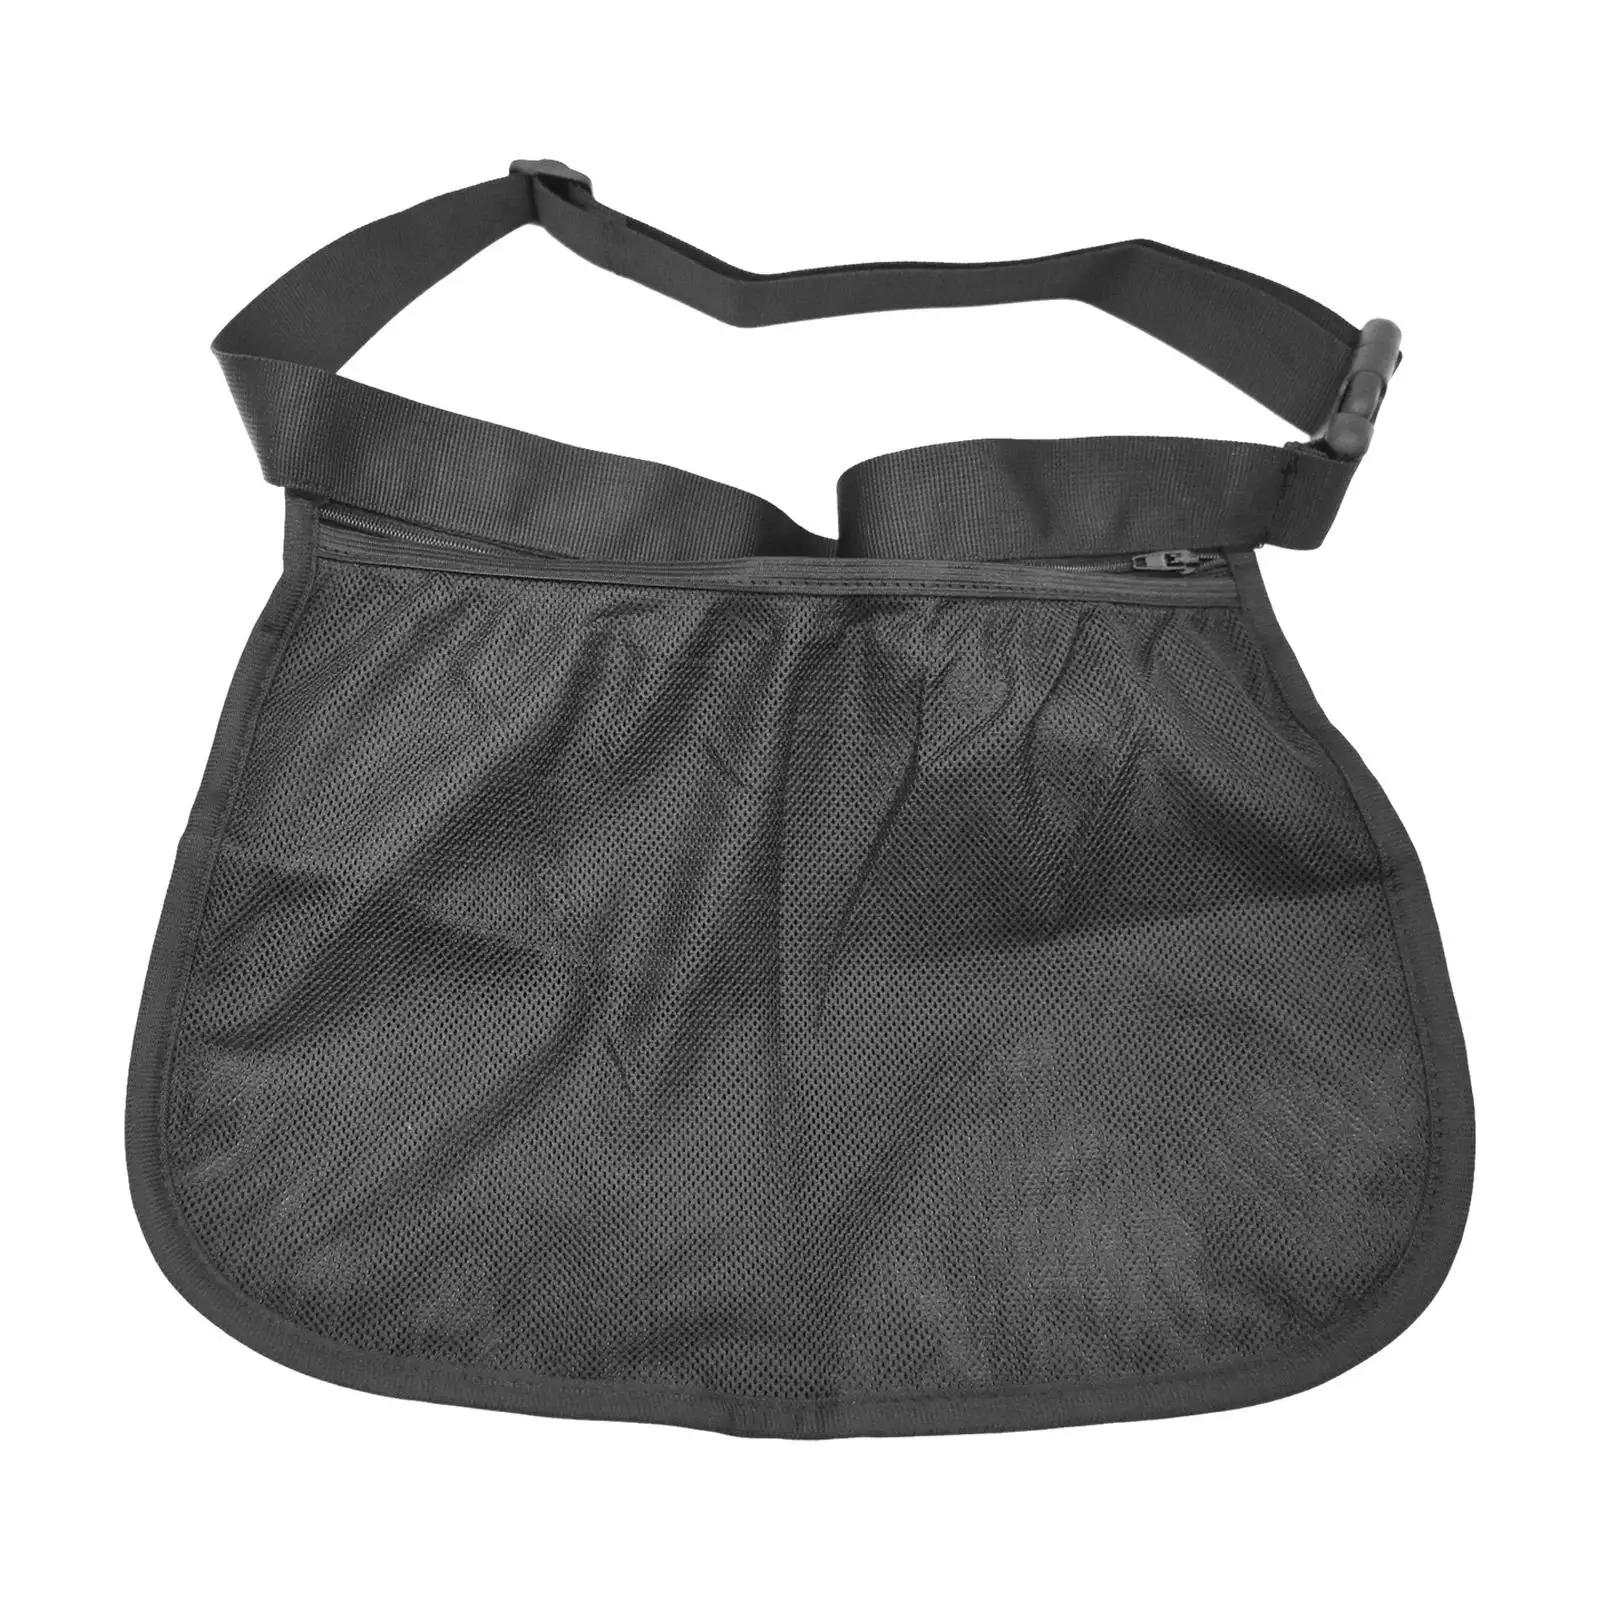 Tennis Ball Holder, Outdoor Ball Storage Bag Waist Hip Bag, Tennis Ball Storage